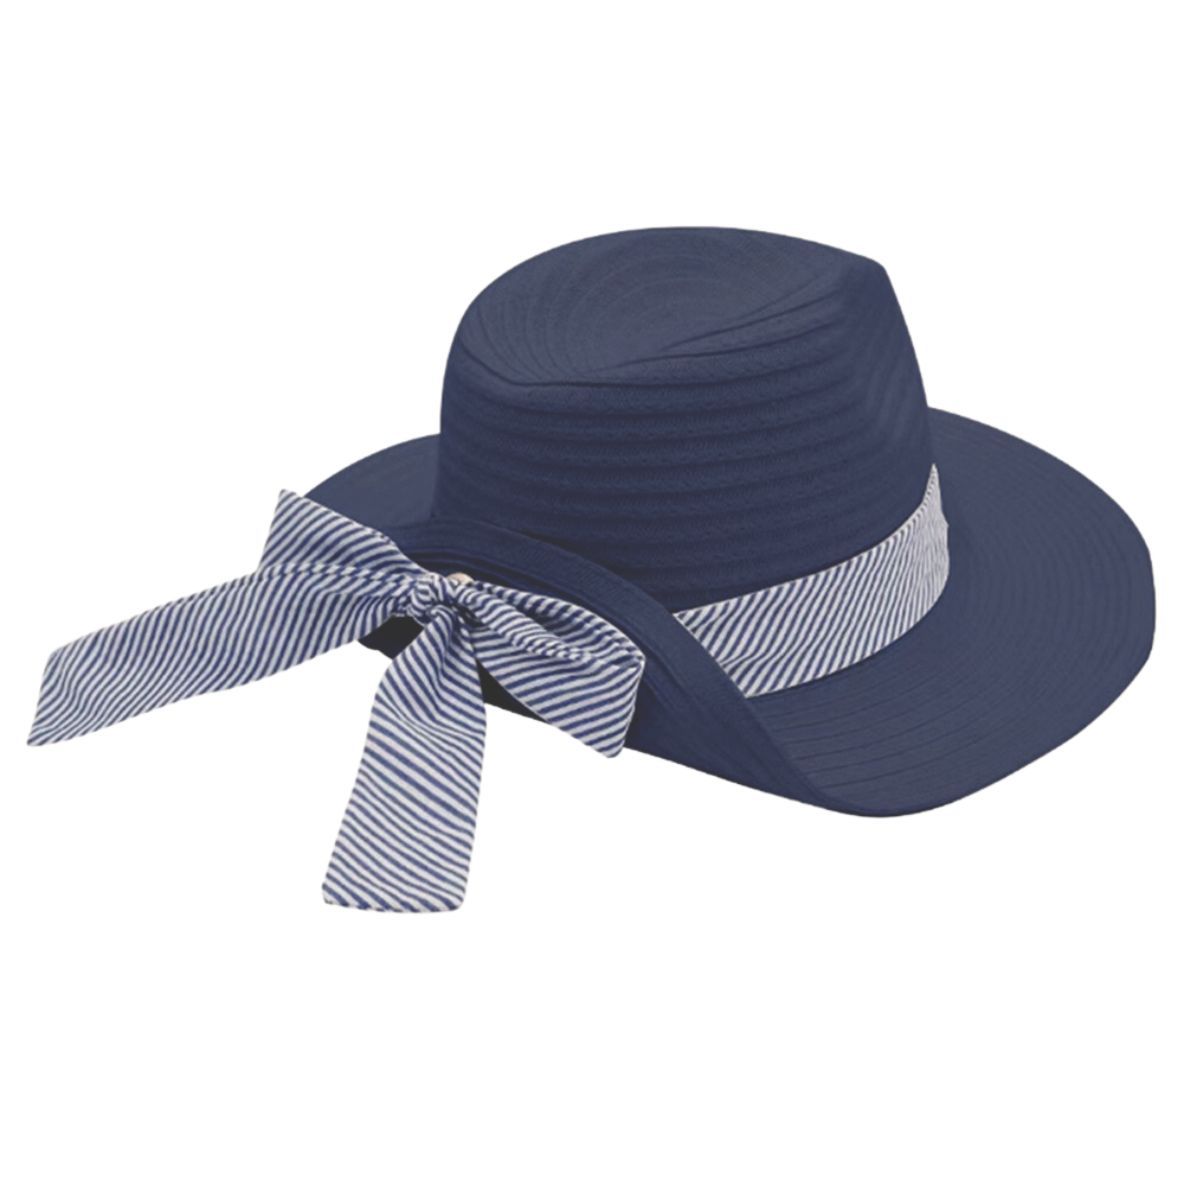 Navy Striped Bow Fedora Hat